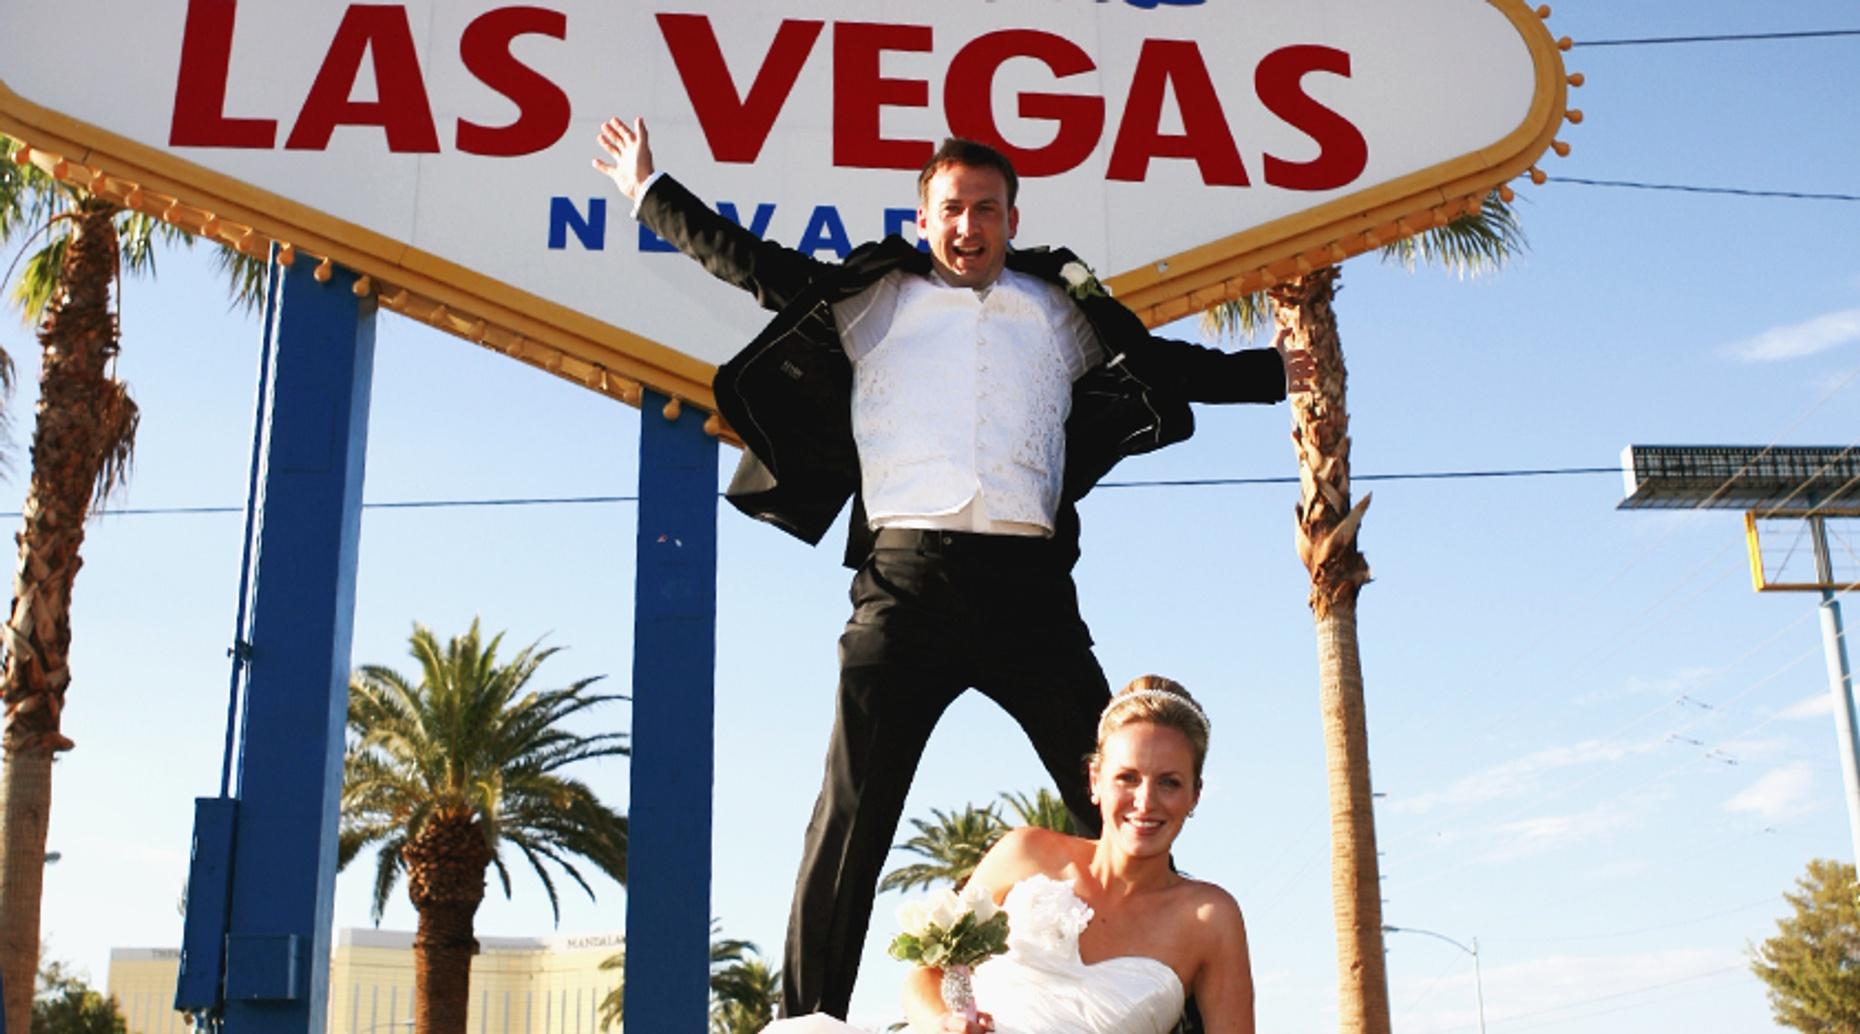 Renewal of Vows in a Las Vegas Wedding Chapel